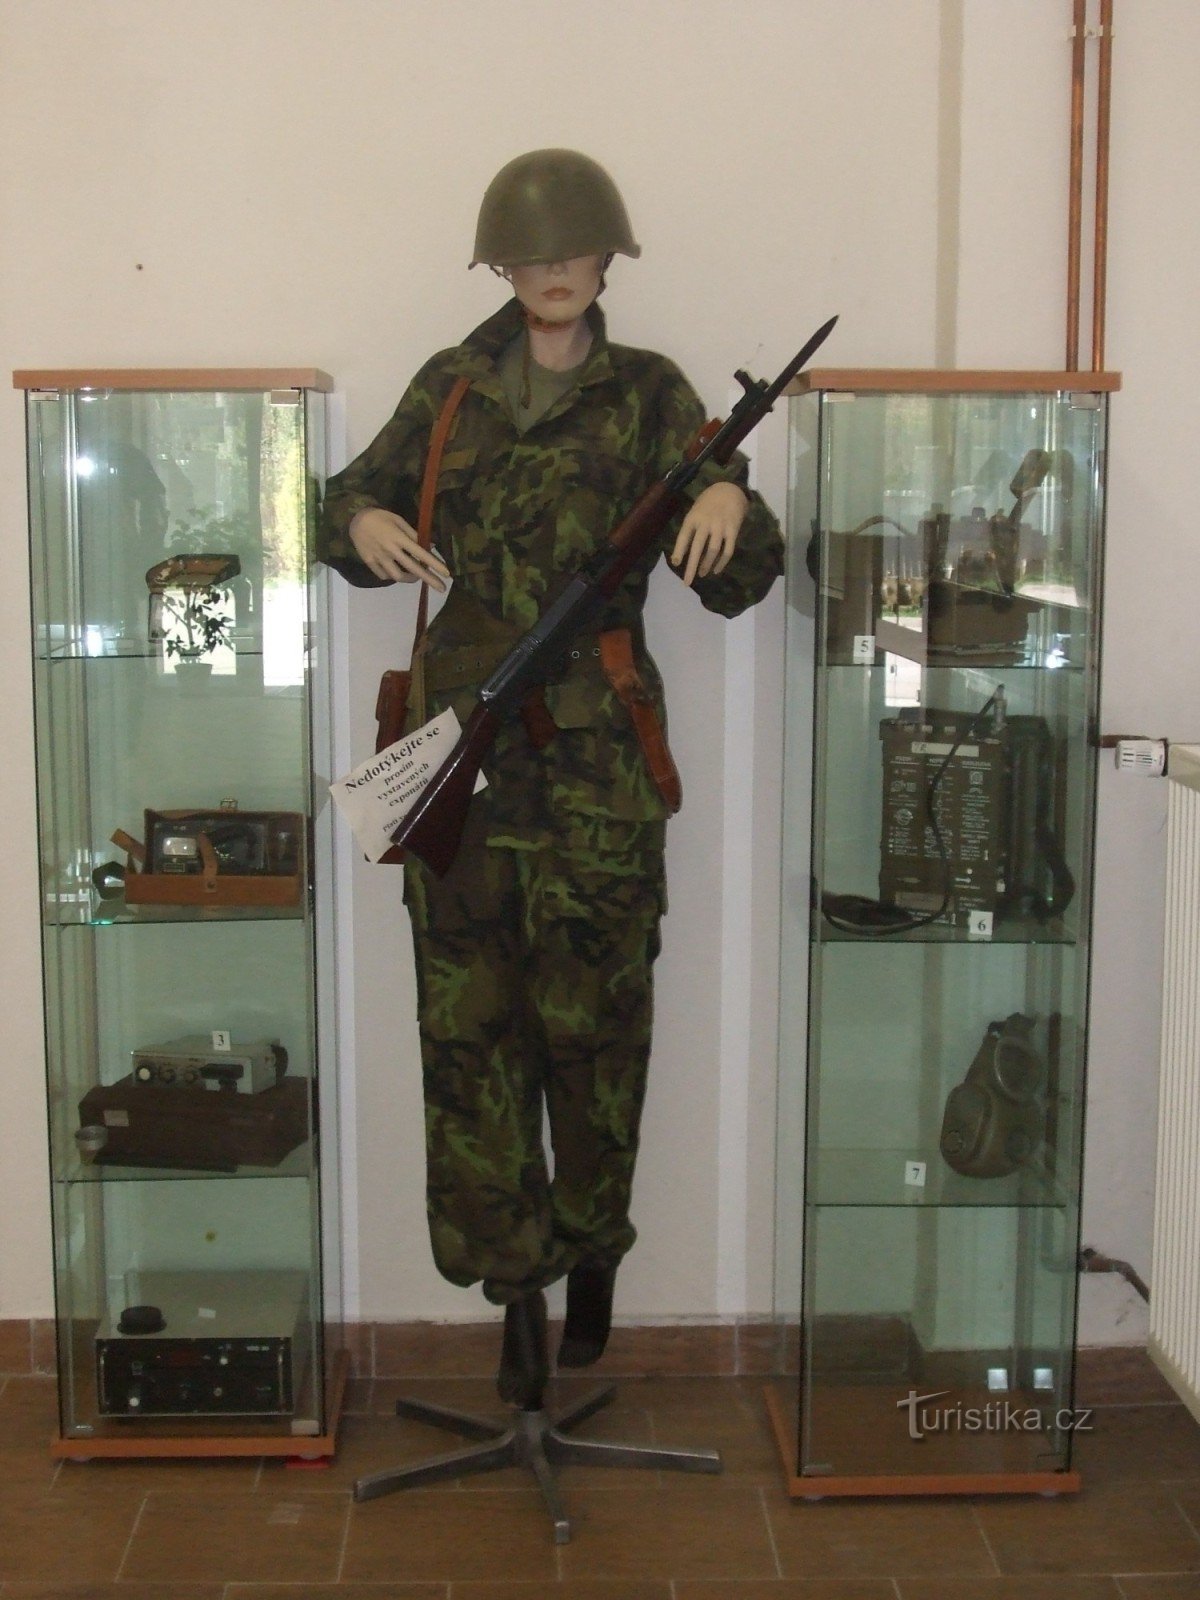 display of military equipment